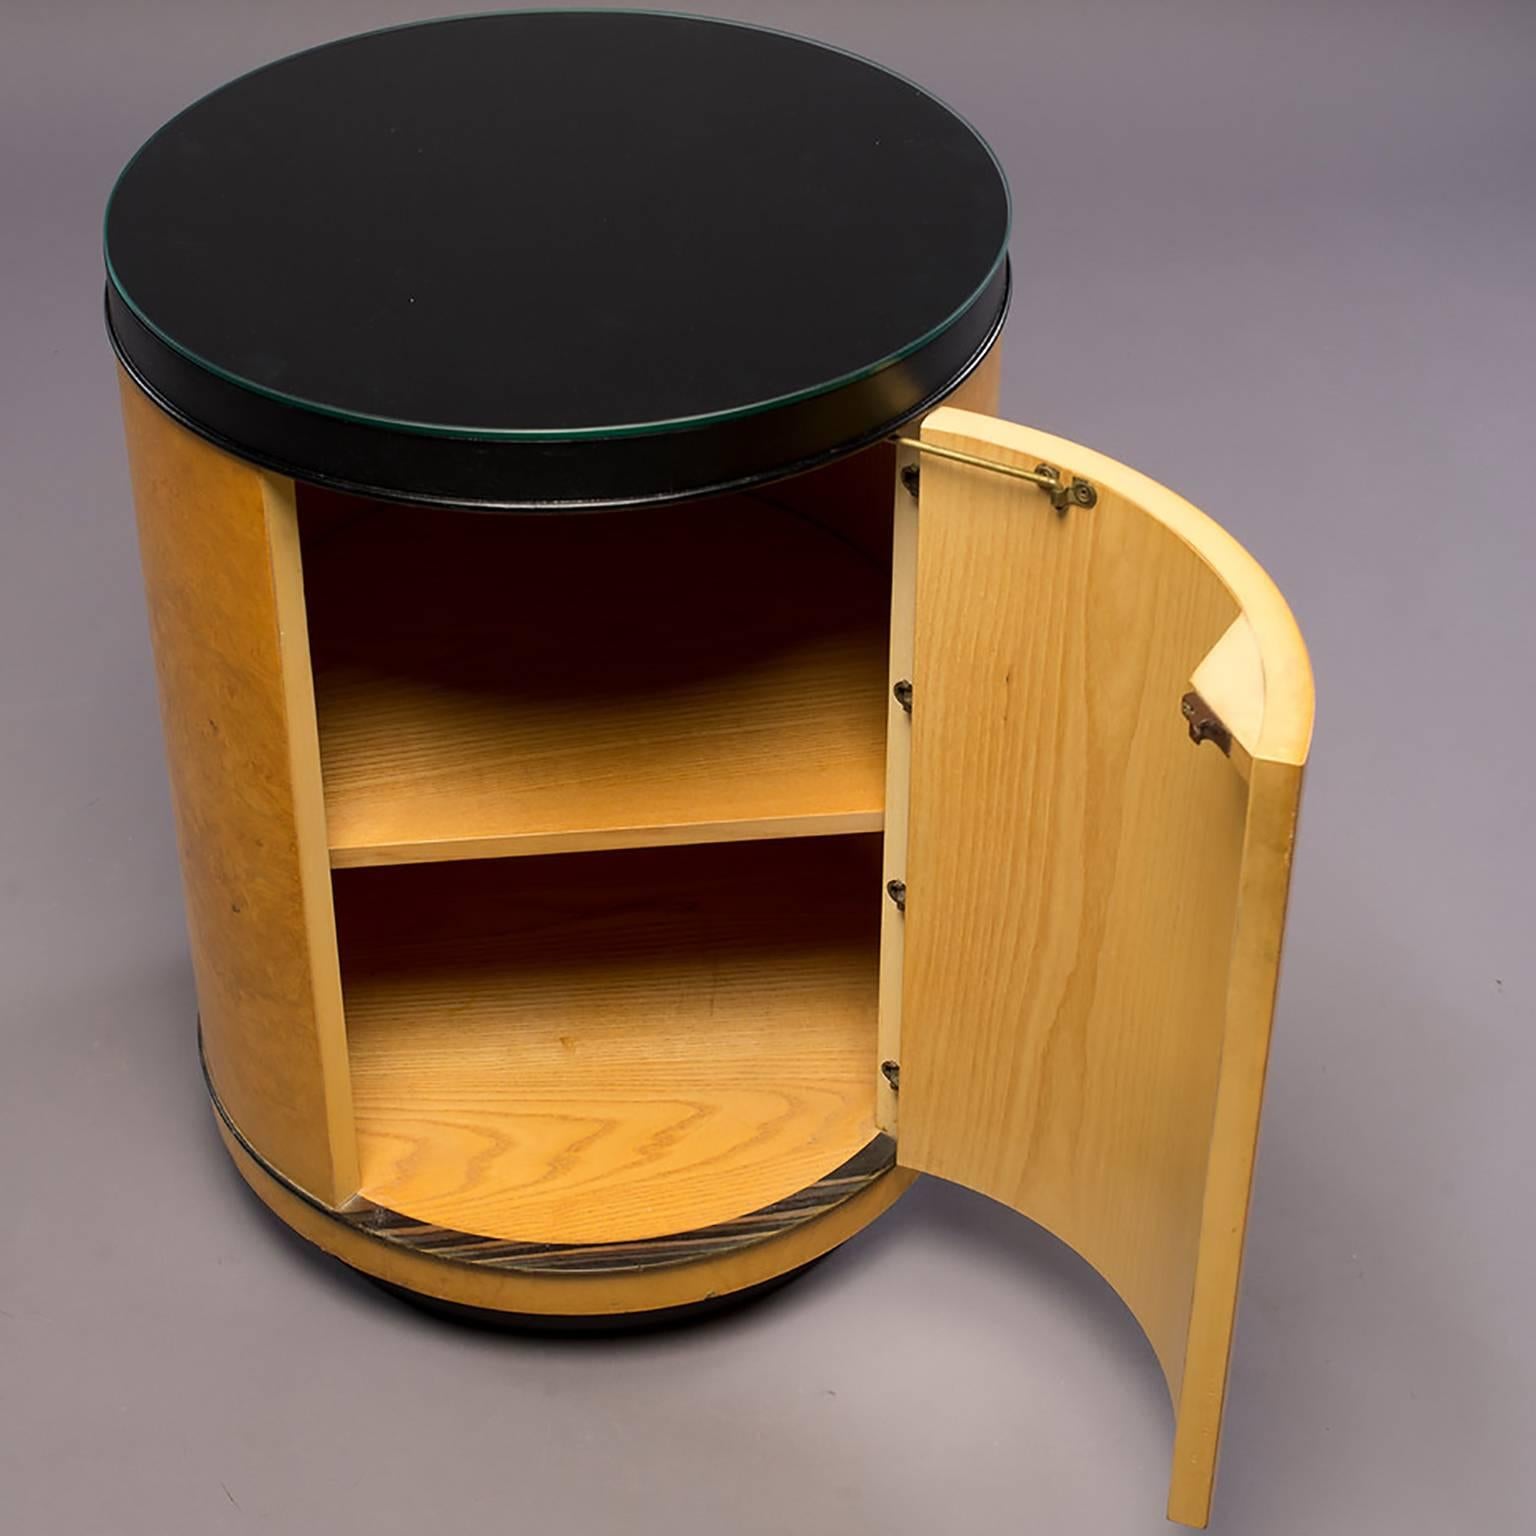 Midcentury Olivewood Drum Table Cabinet (amerikanisch)